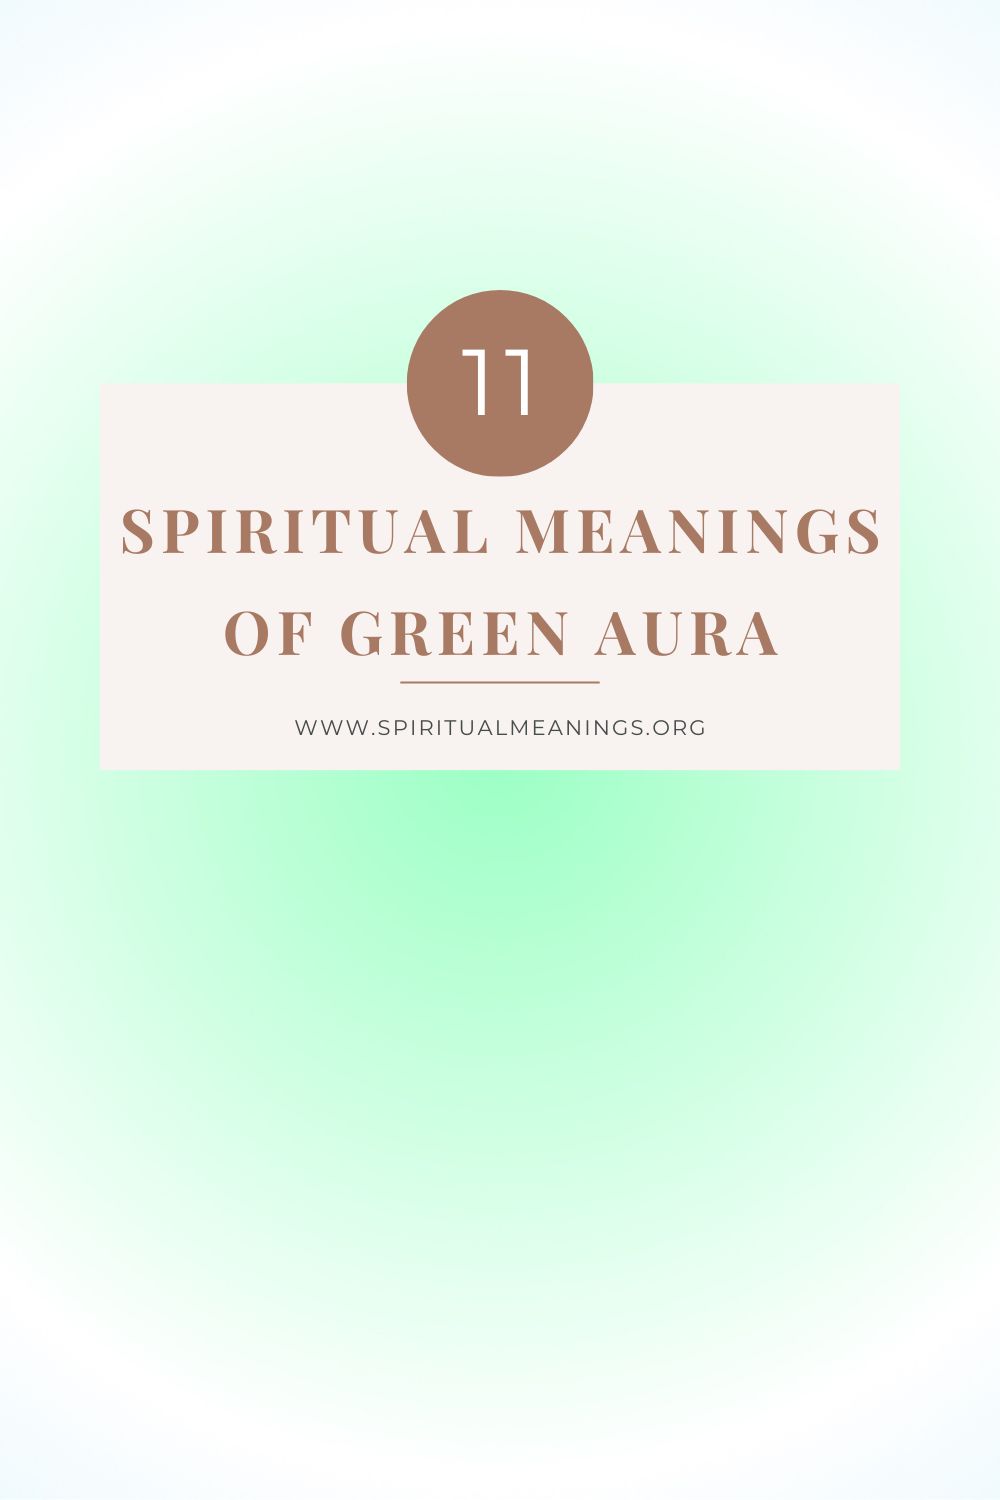 14 Spiritual Meanings of Green Aura